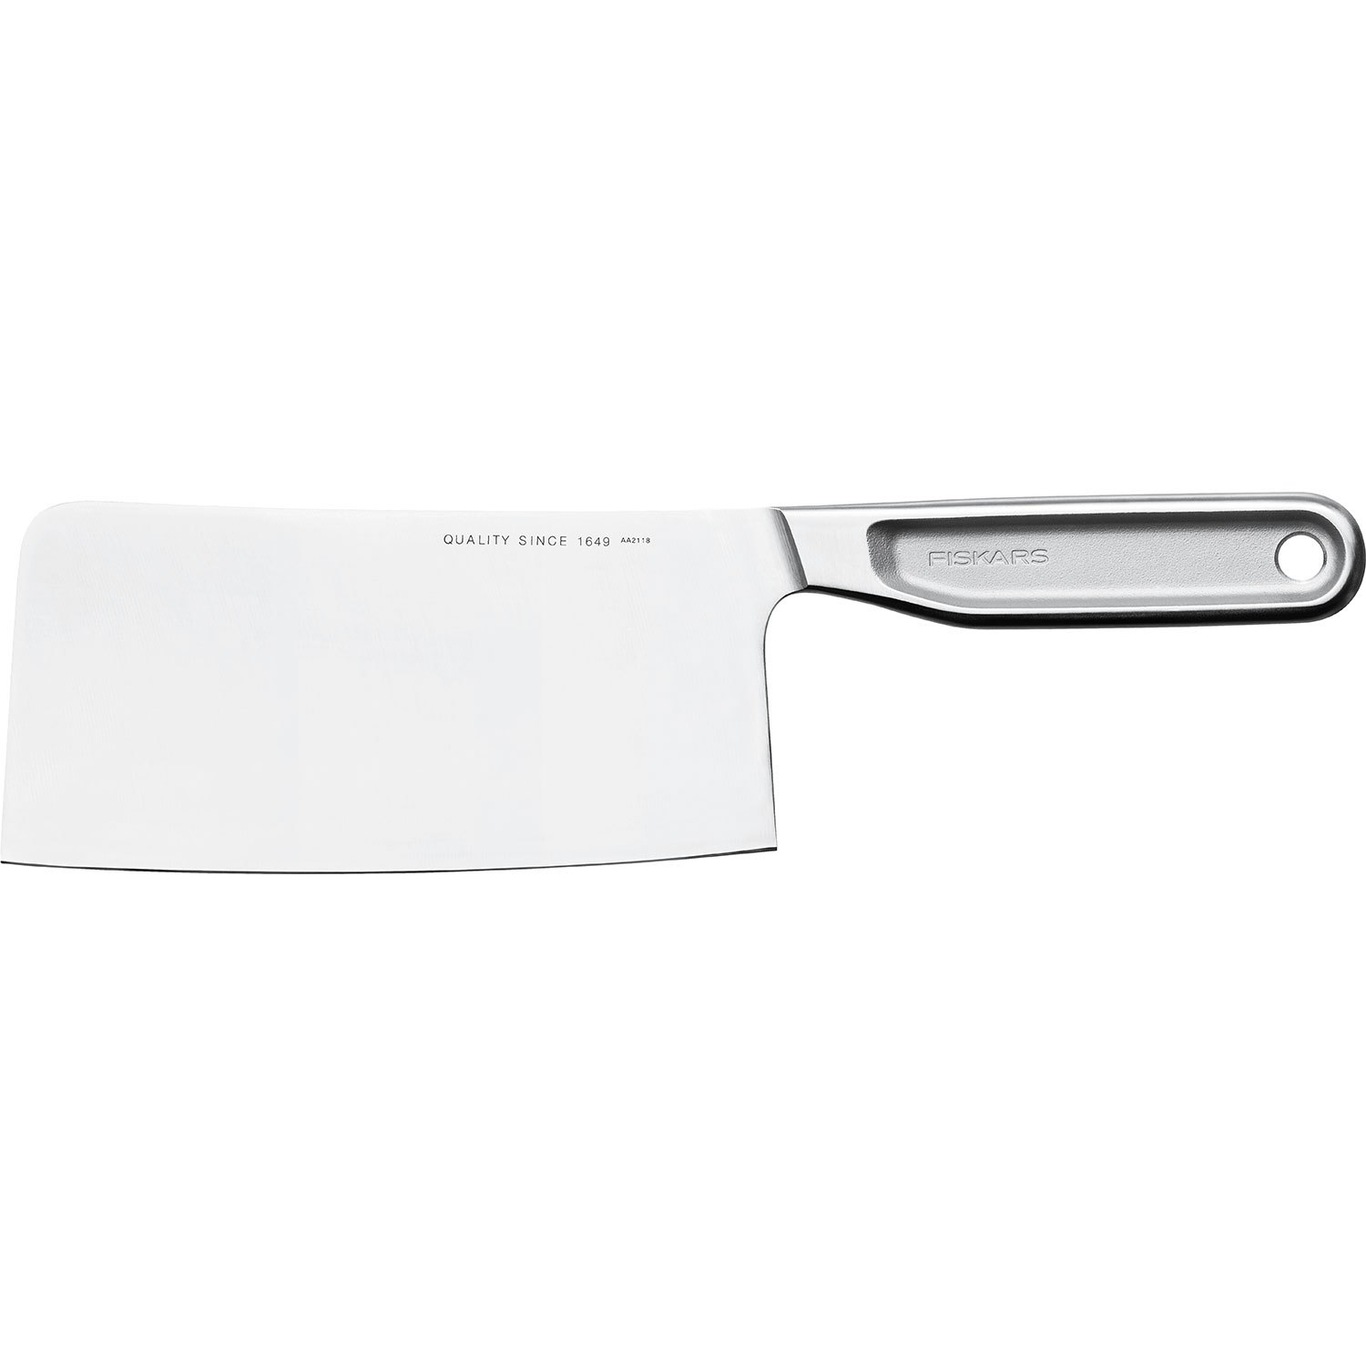 https://royaldesign.com/image/2/fiskars-all-steel-chop-knife-16-cm-0?w=800&quality=80